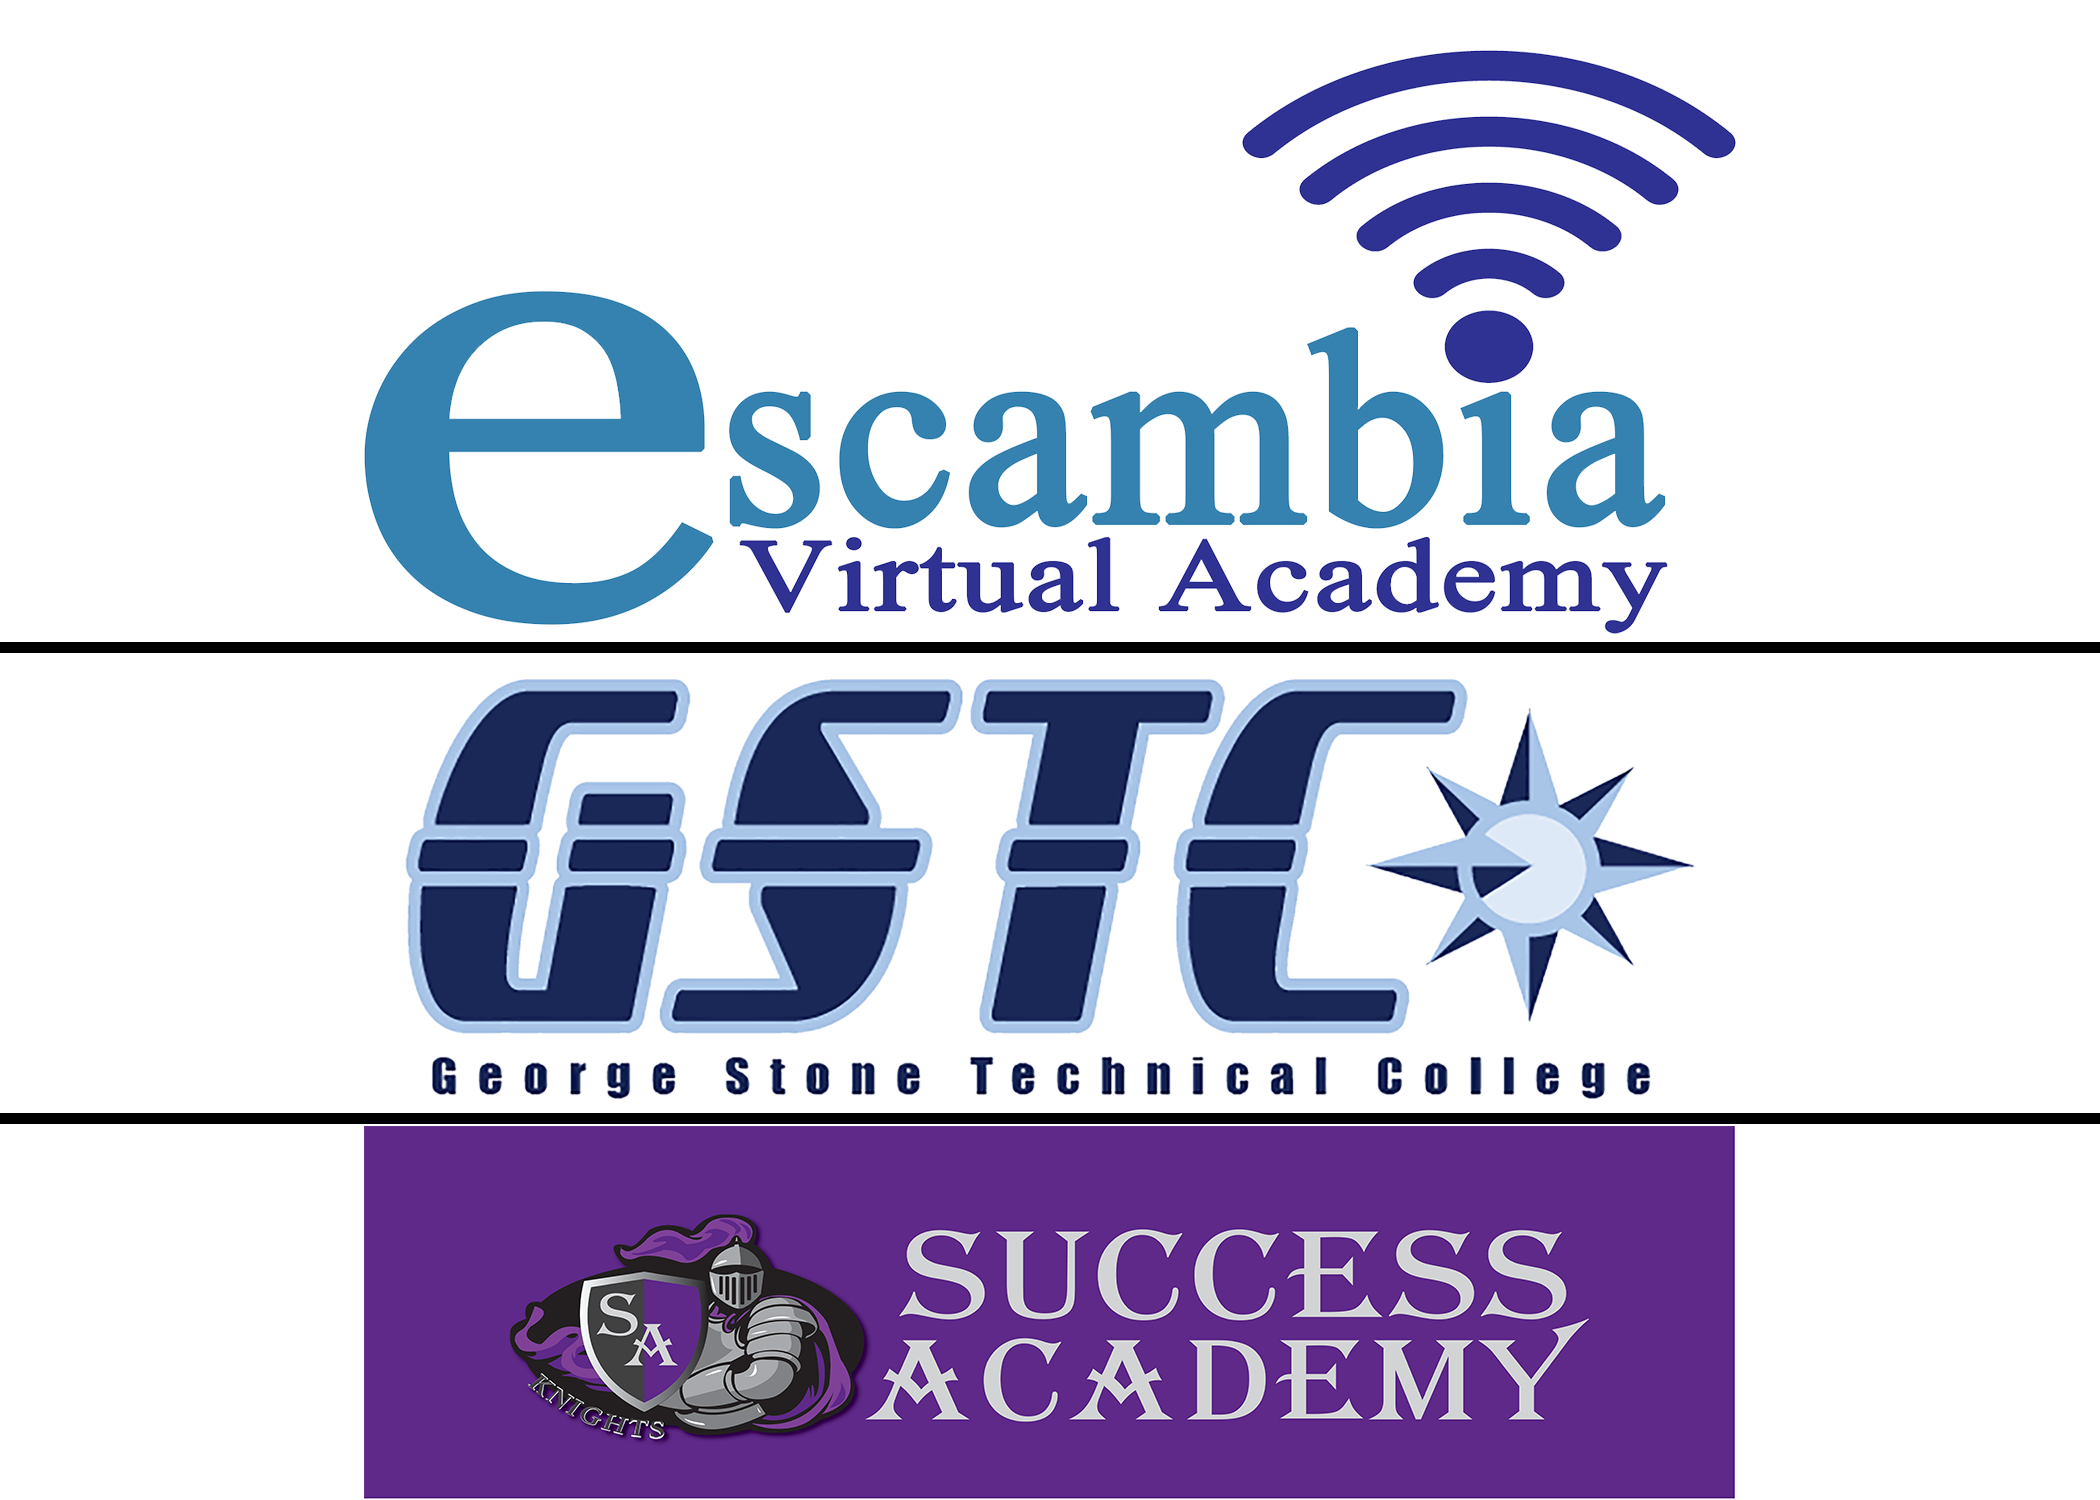 EVA, Success Academy, George Stone,
Acceleration Academy, Achieve Academy